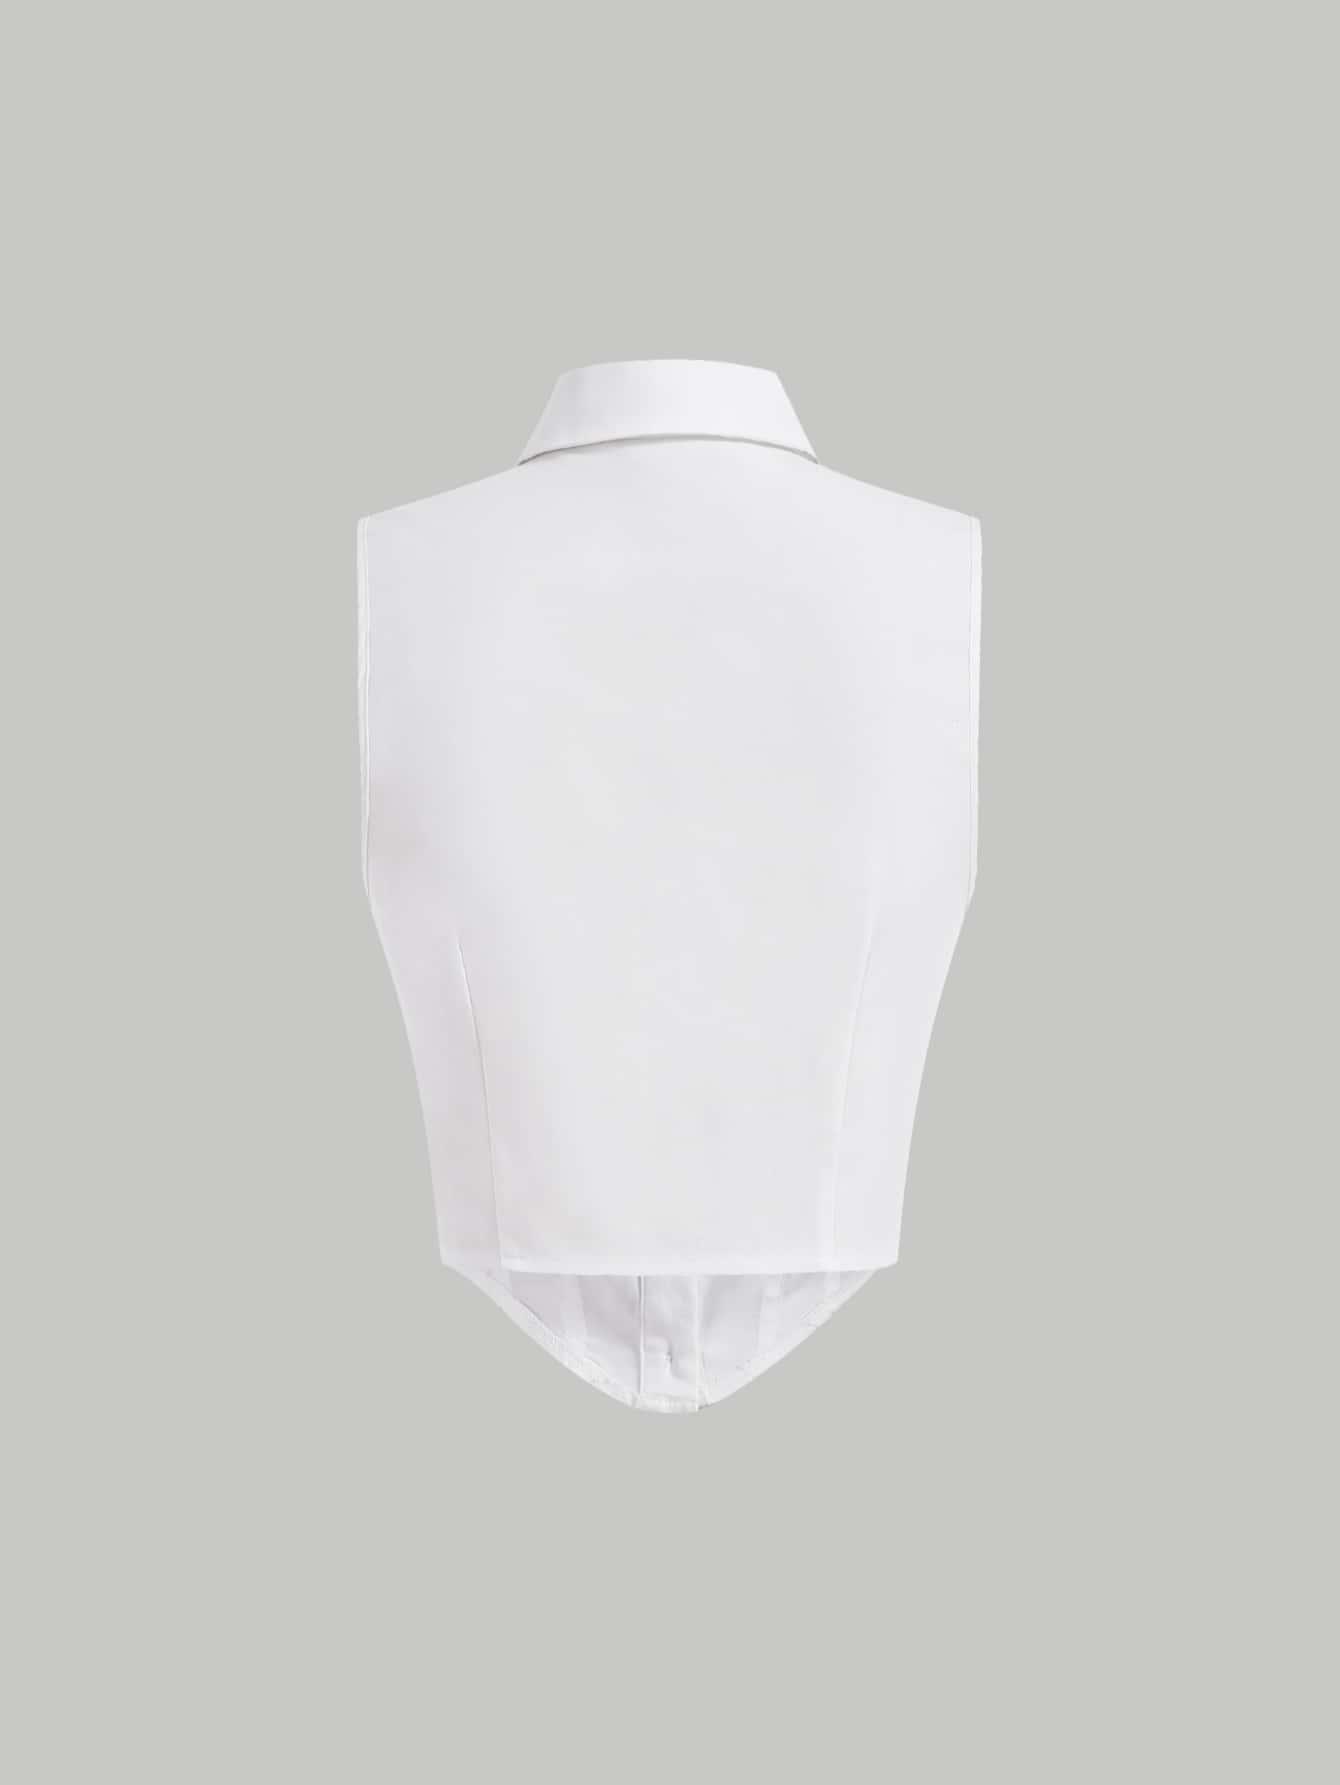 koszulowy biały top gorset krawat komplet